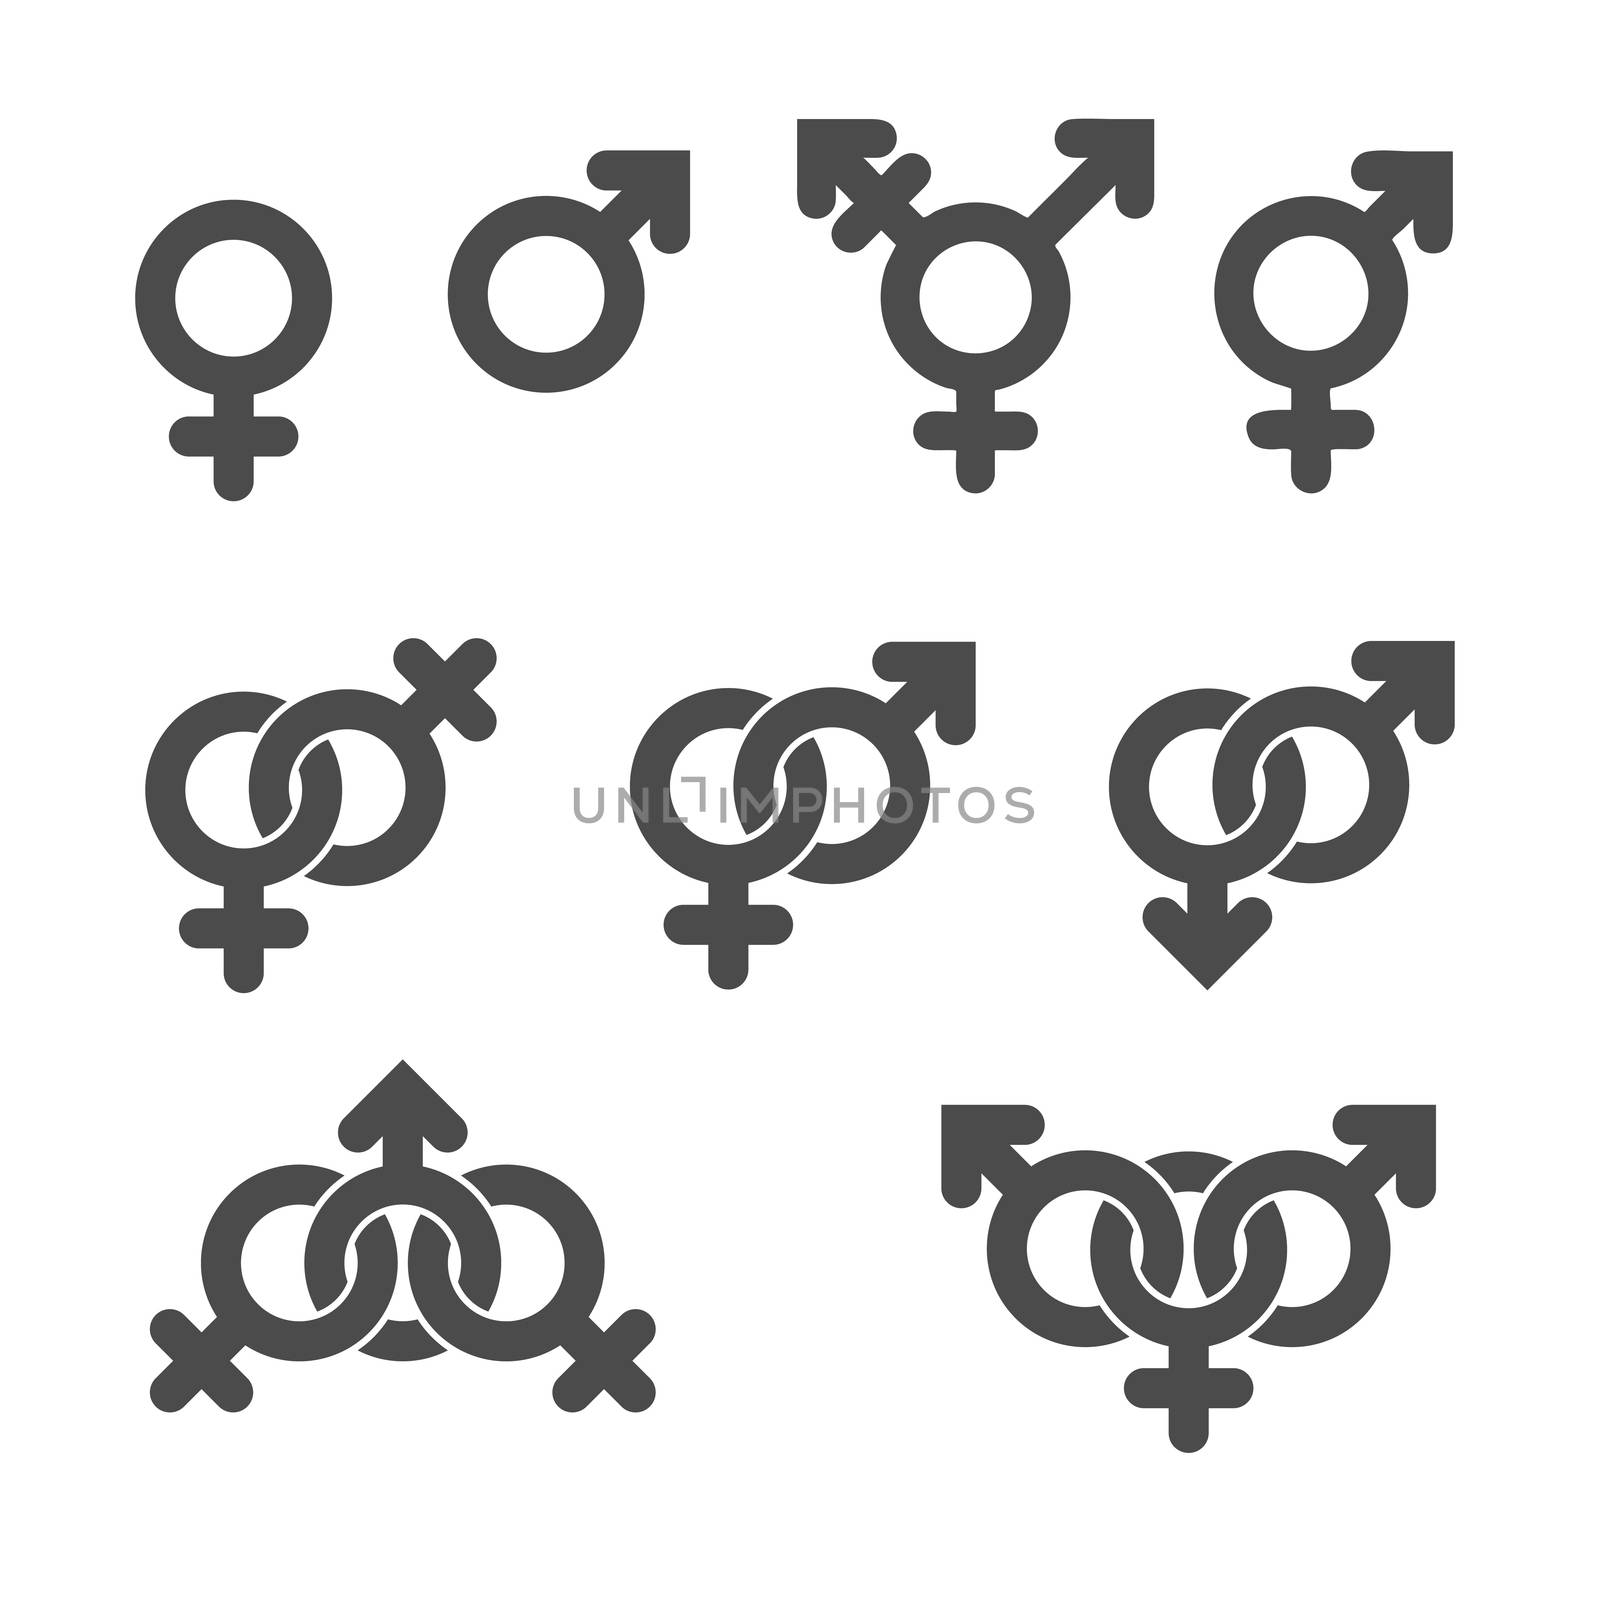 Gender symbol icons. Graphic vector elements set.